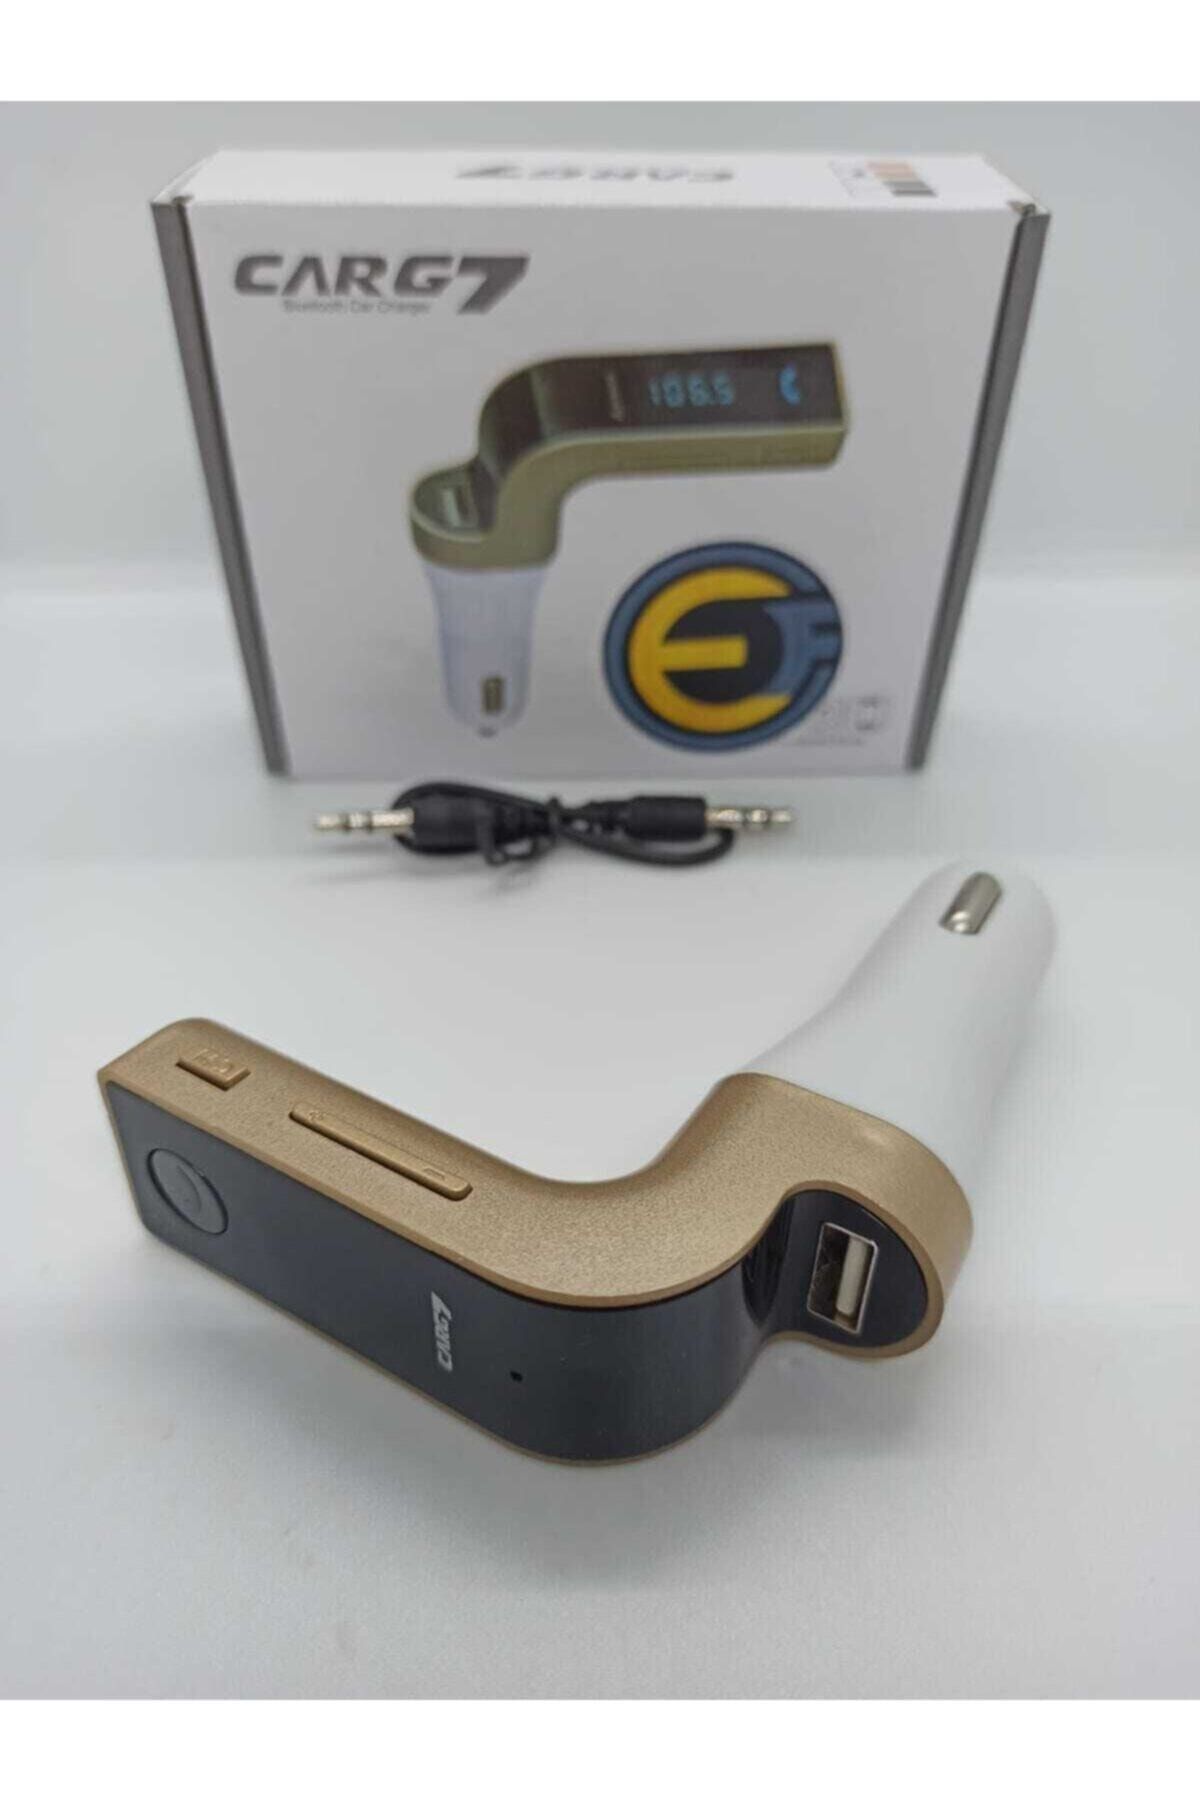 EFGARAGE Carg7 Oto Çakmaklık Araç Kiti Fm Transmitter Bluetooth Kablosuz Usb Mp3 Çalar Kart Girişli Aux